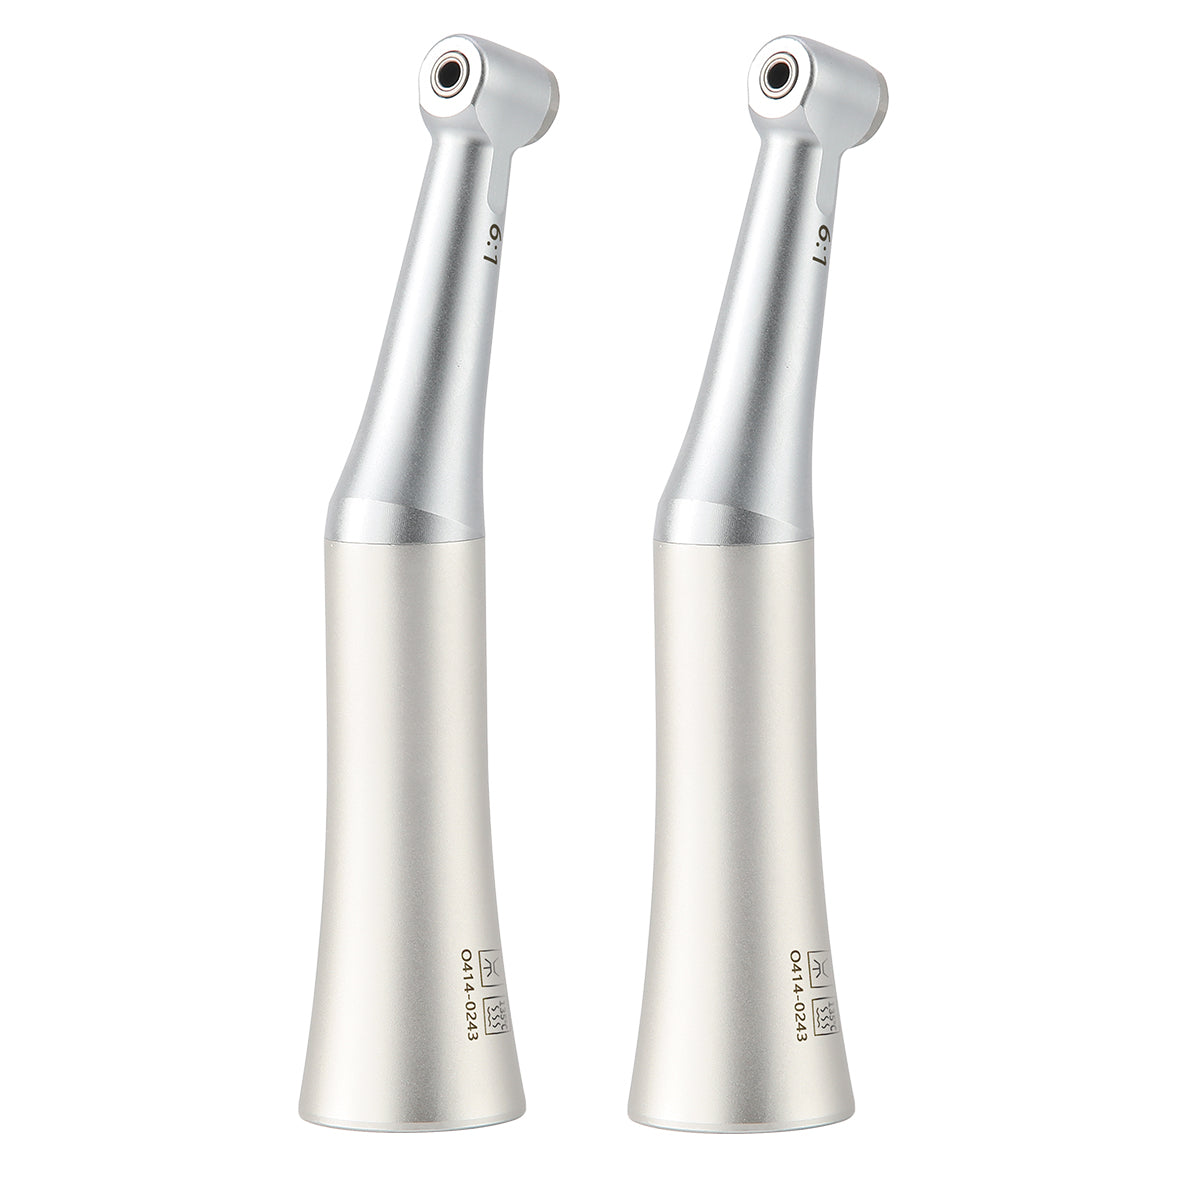 2 Pcs Dental 6:1 Reduction Endo Handpiece Contra Angle Mini Head Push Button - azdentall.com